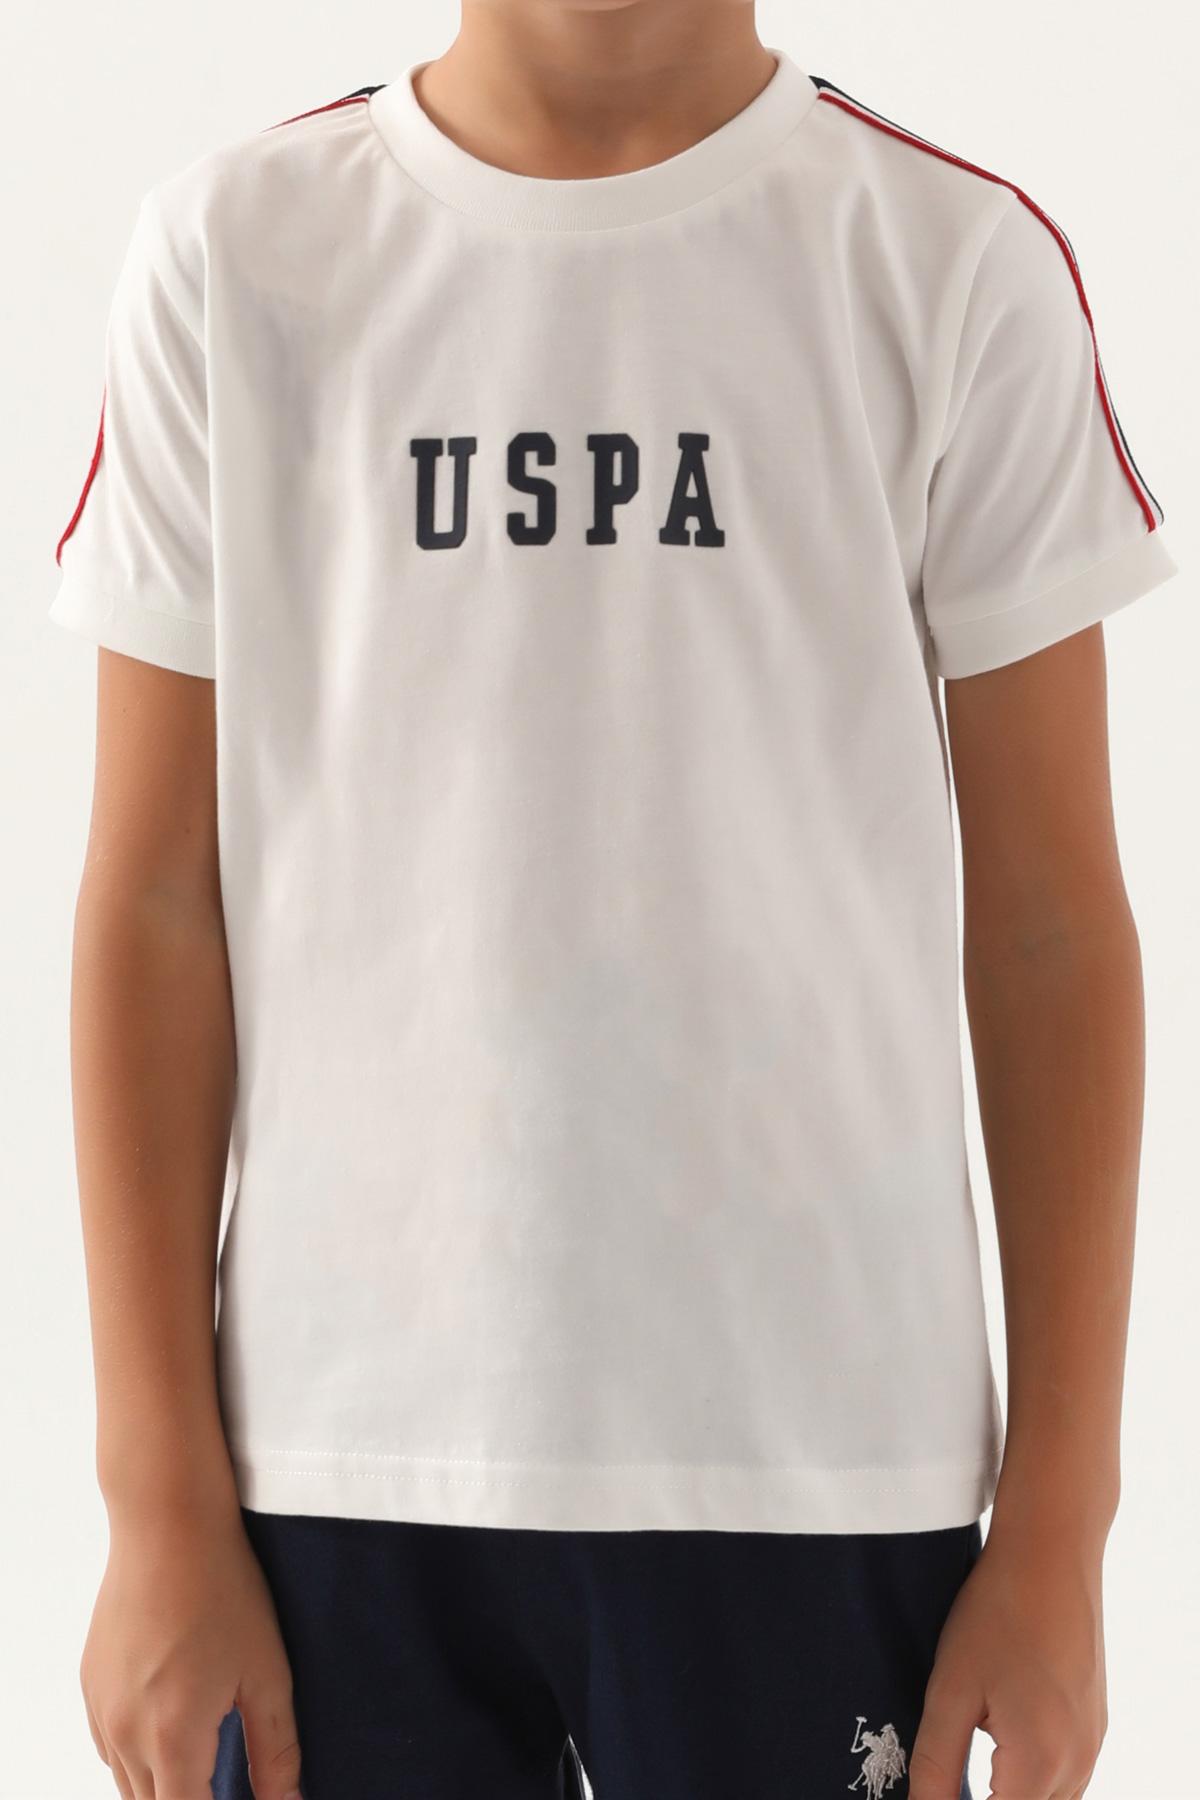 Selected image for U.S. Polo Assn. Komplet za dečake US1705-G, Crno-beli